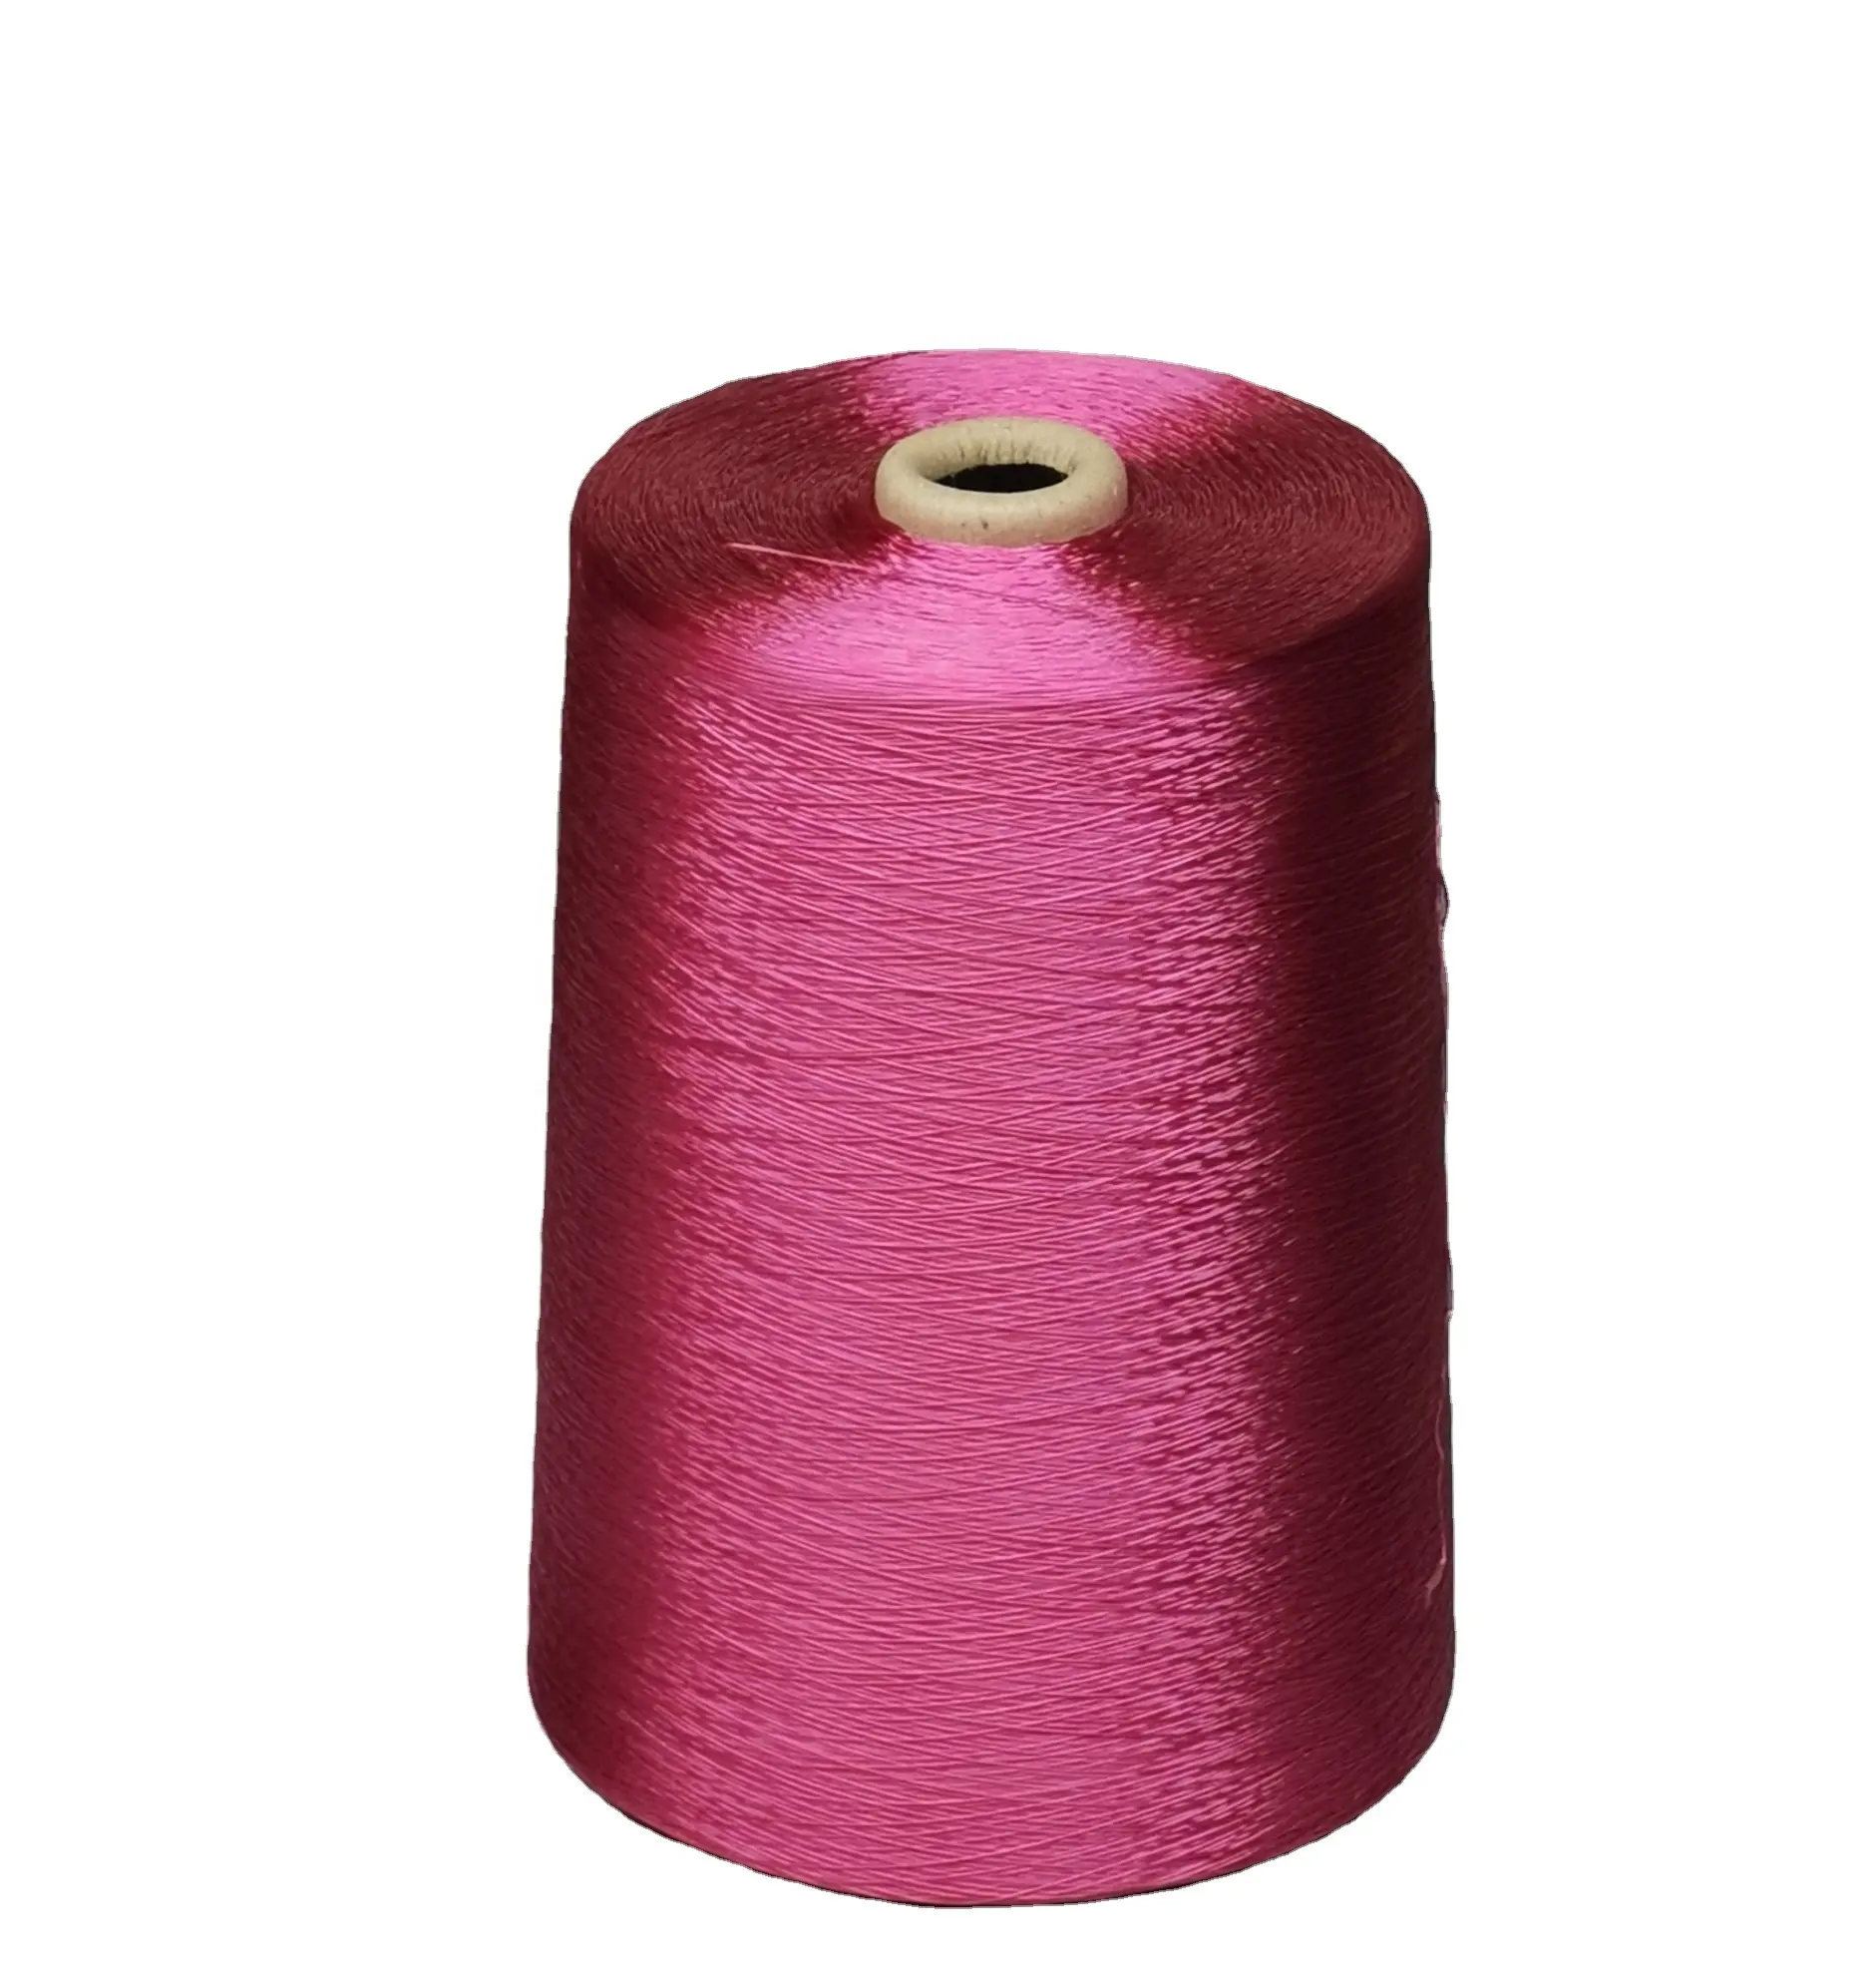 Bright color 300D/50F 100% viscose rayon filament tube yarn cheap price